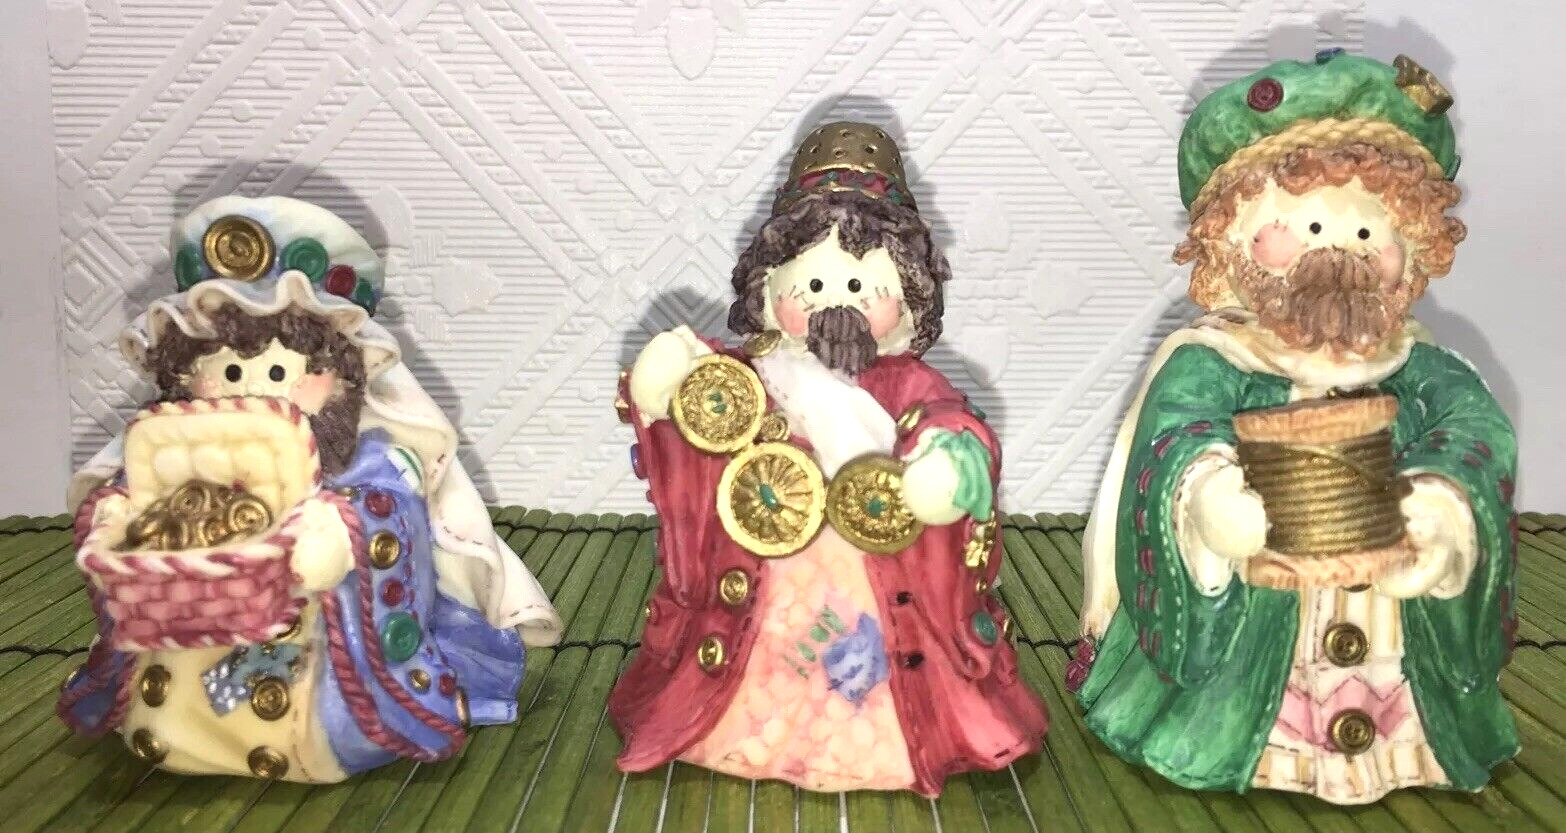 Enesco Cute as a Button Three Wisemen Nativity Figurines 651575 from 1994 IOB